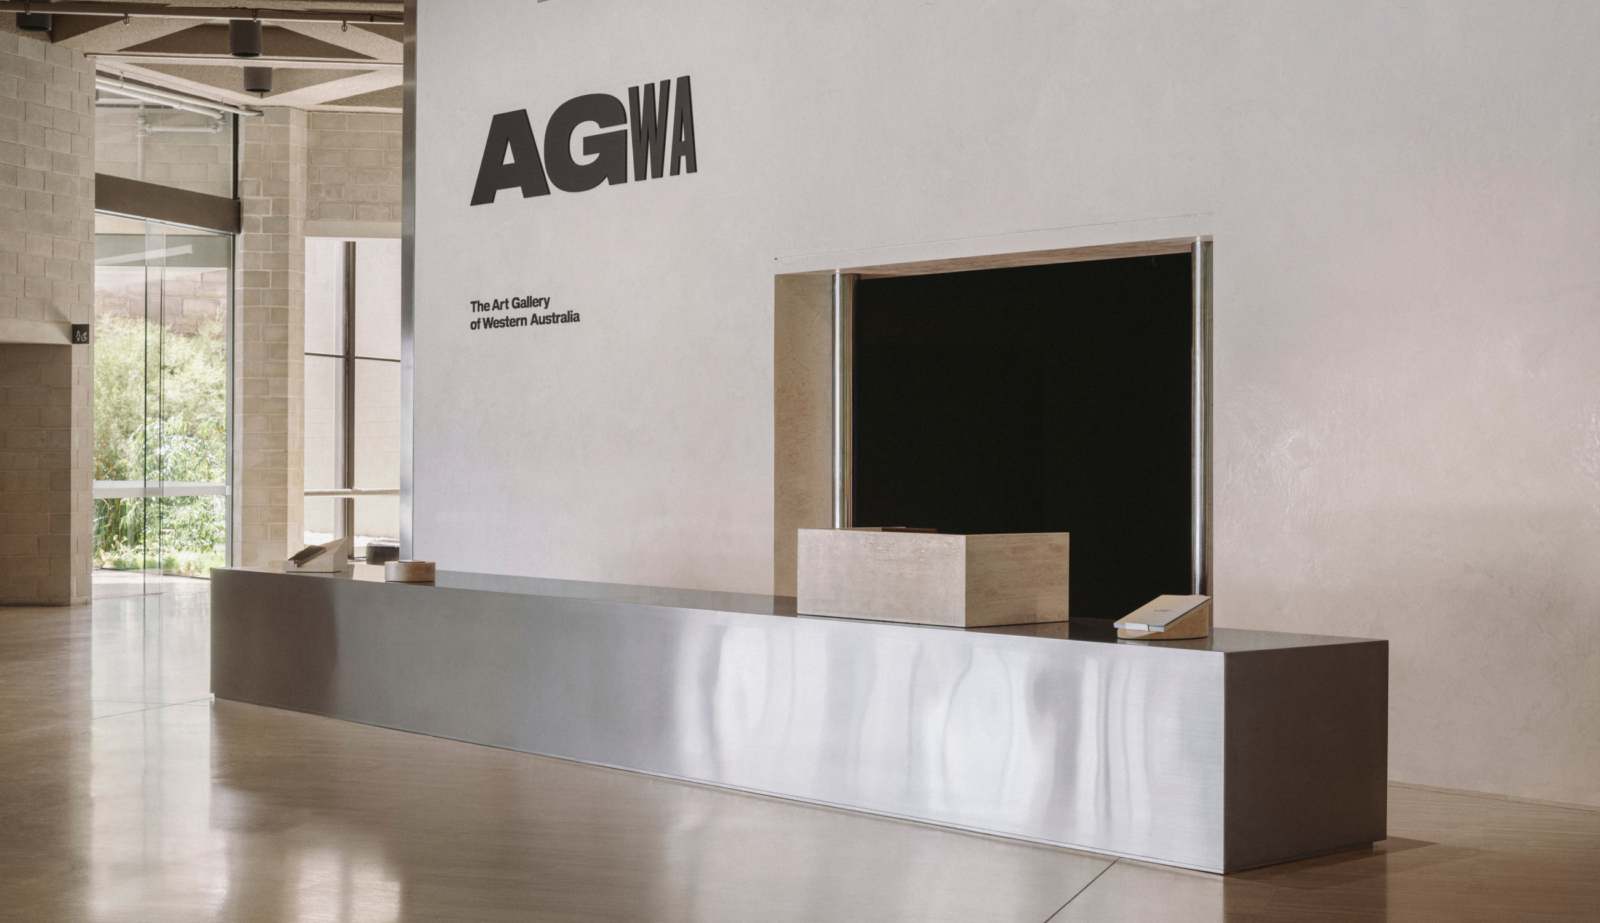 AGWA Foyer & Lobby Refurbishment